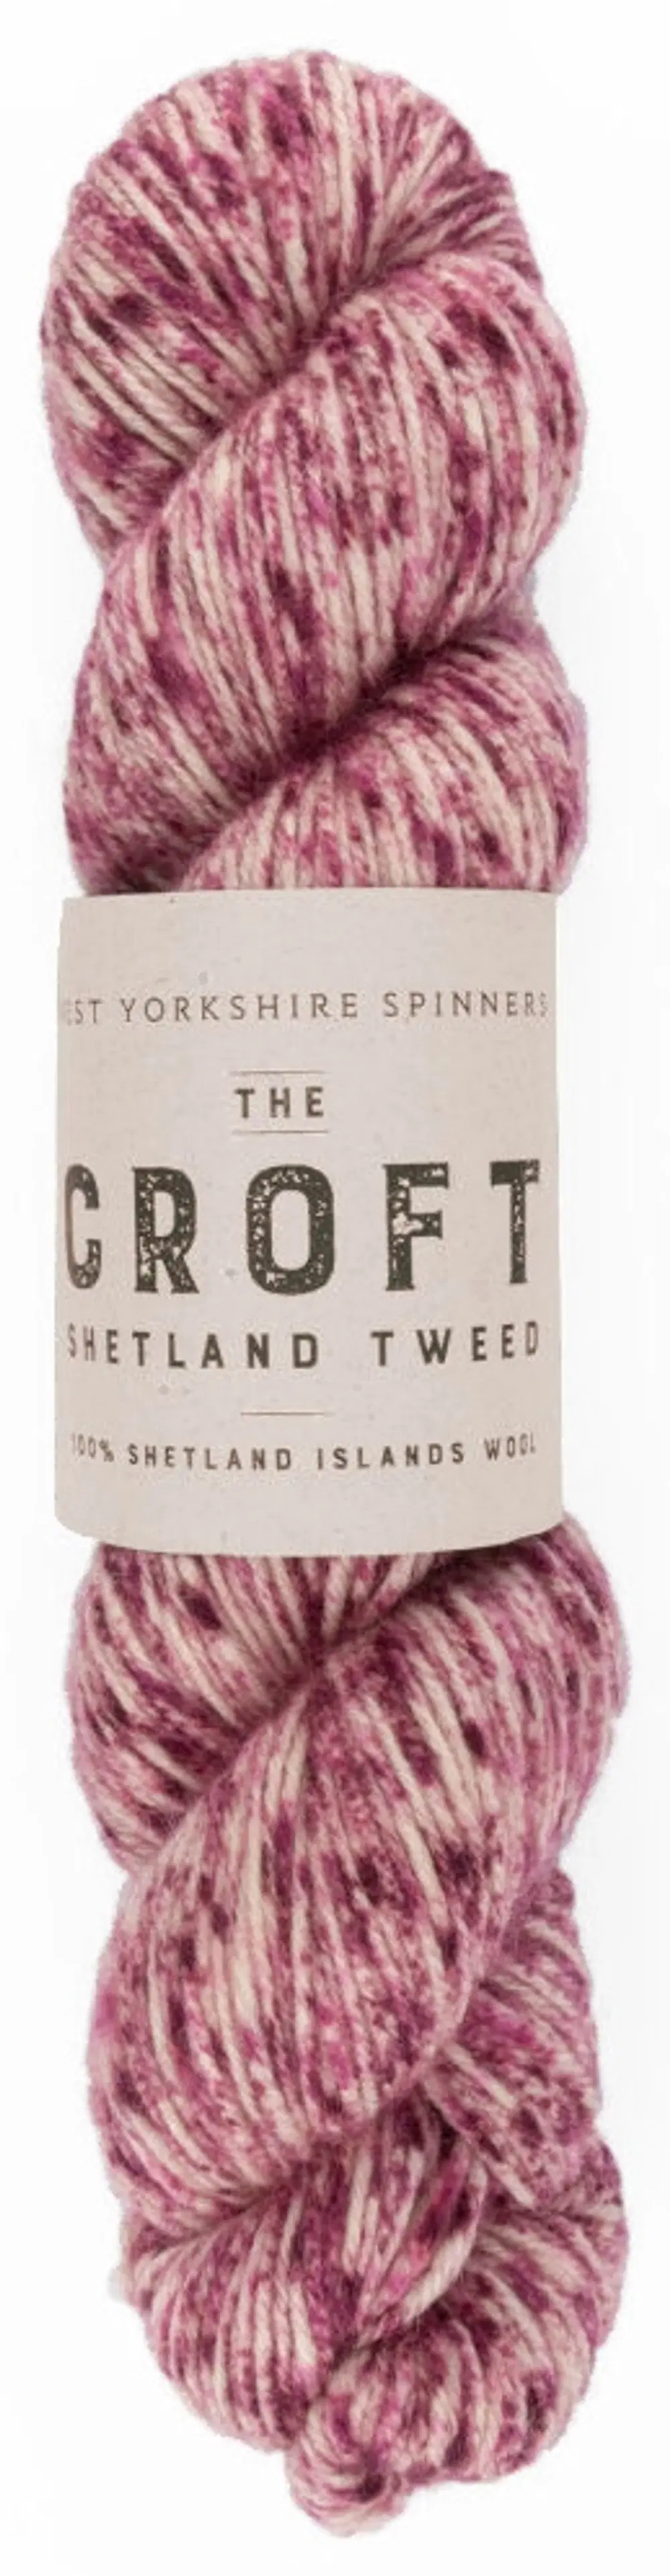 West Yorkshire Spinners lanka The Croft Shetland Tweed DK 100g Skellister 810